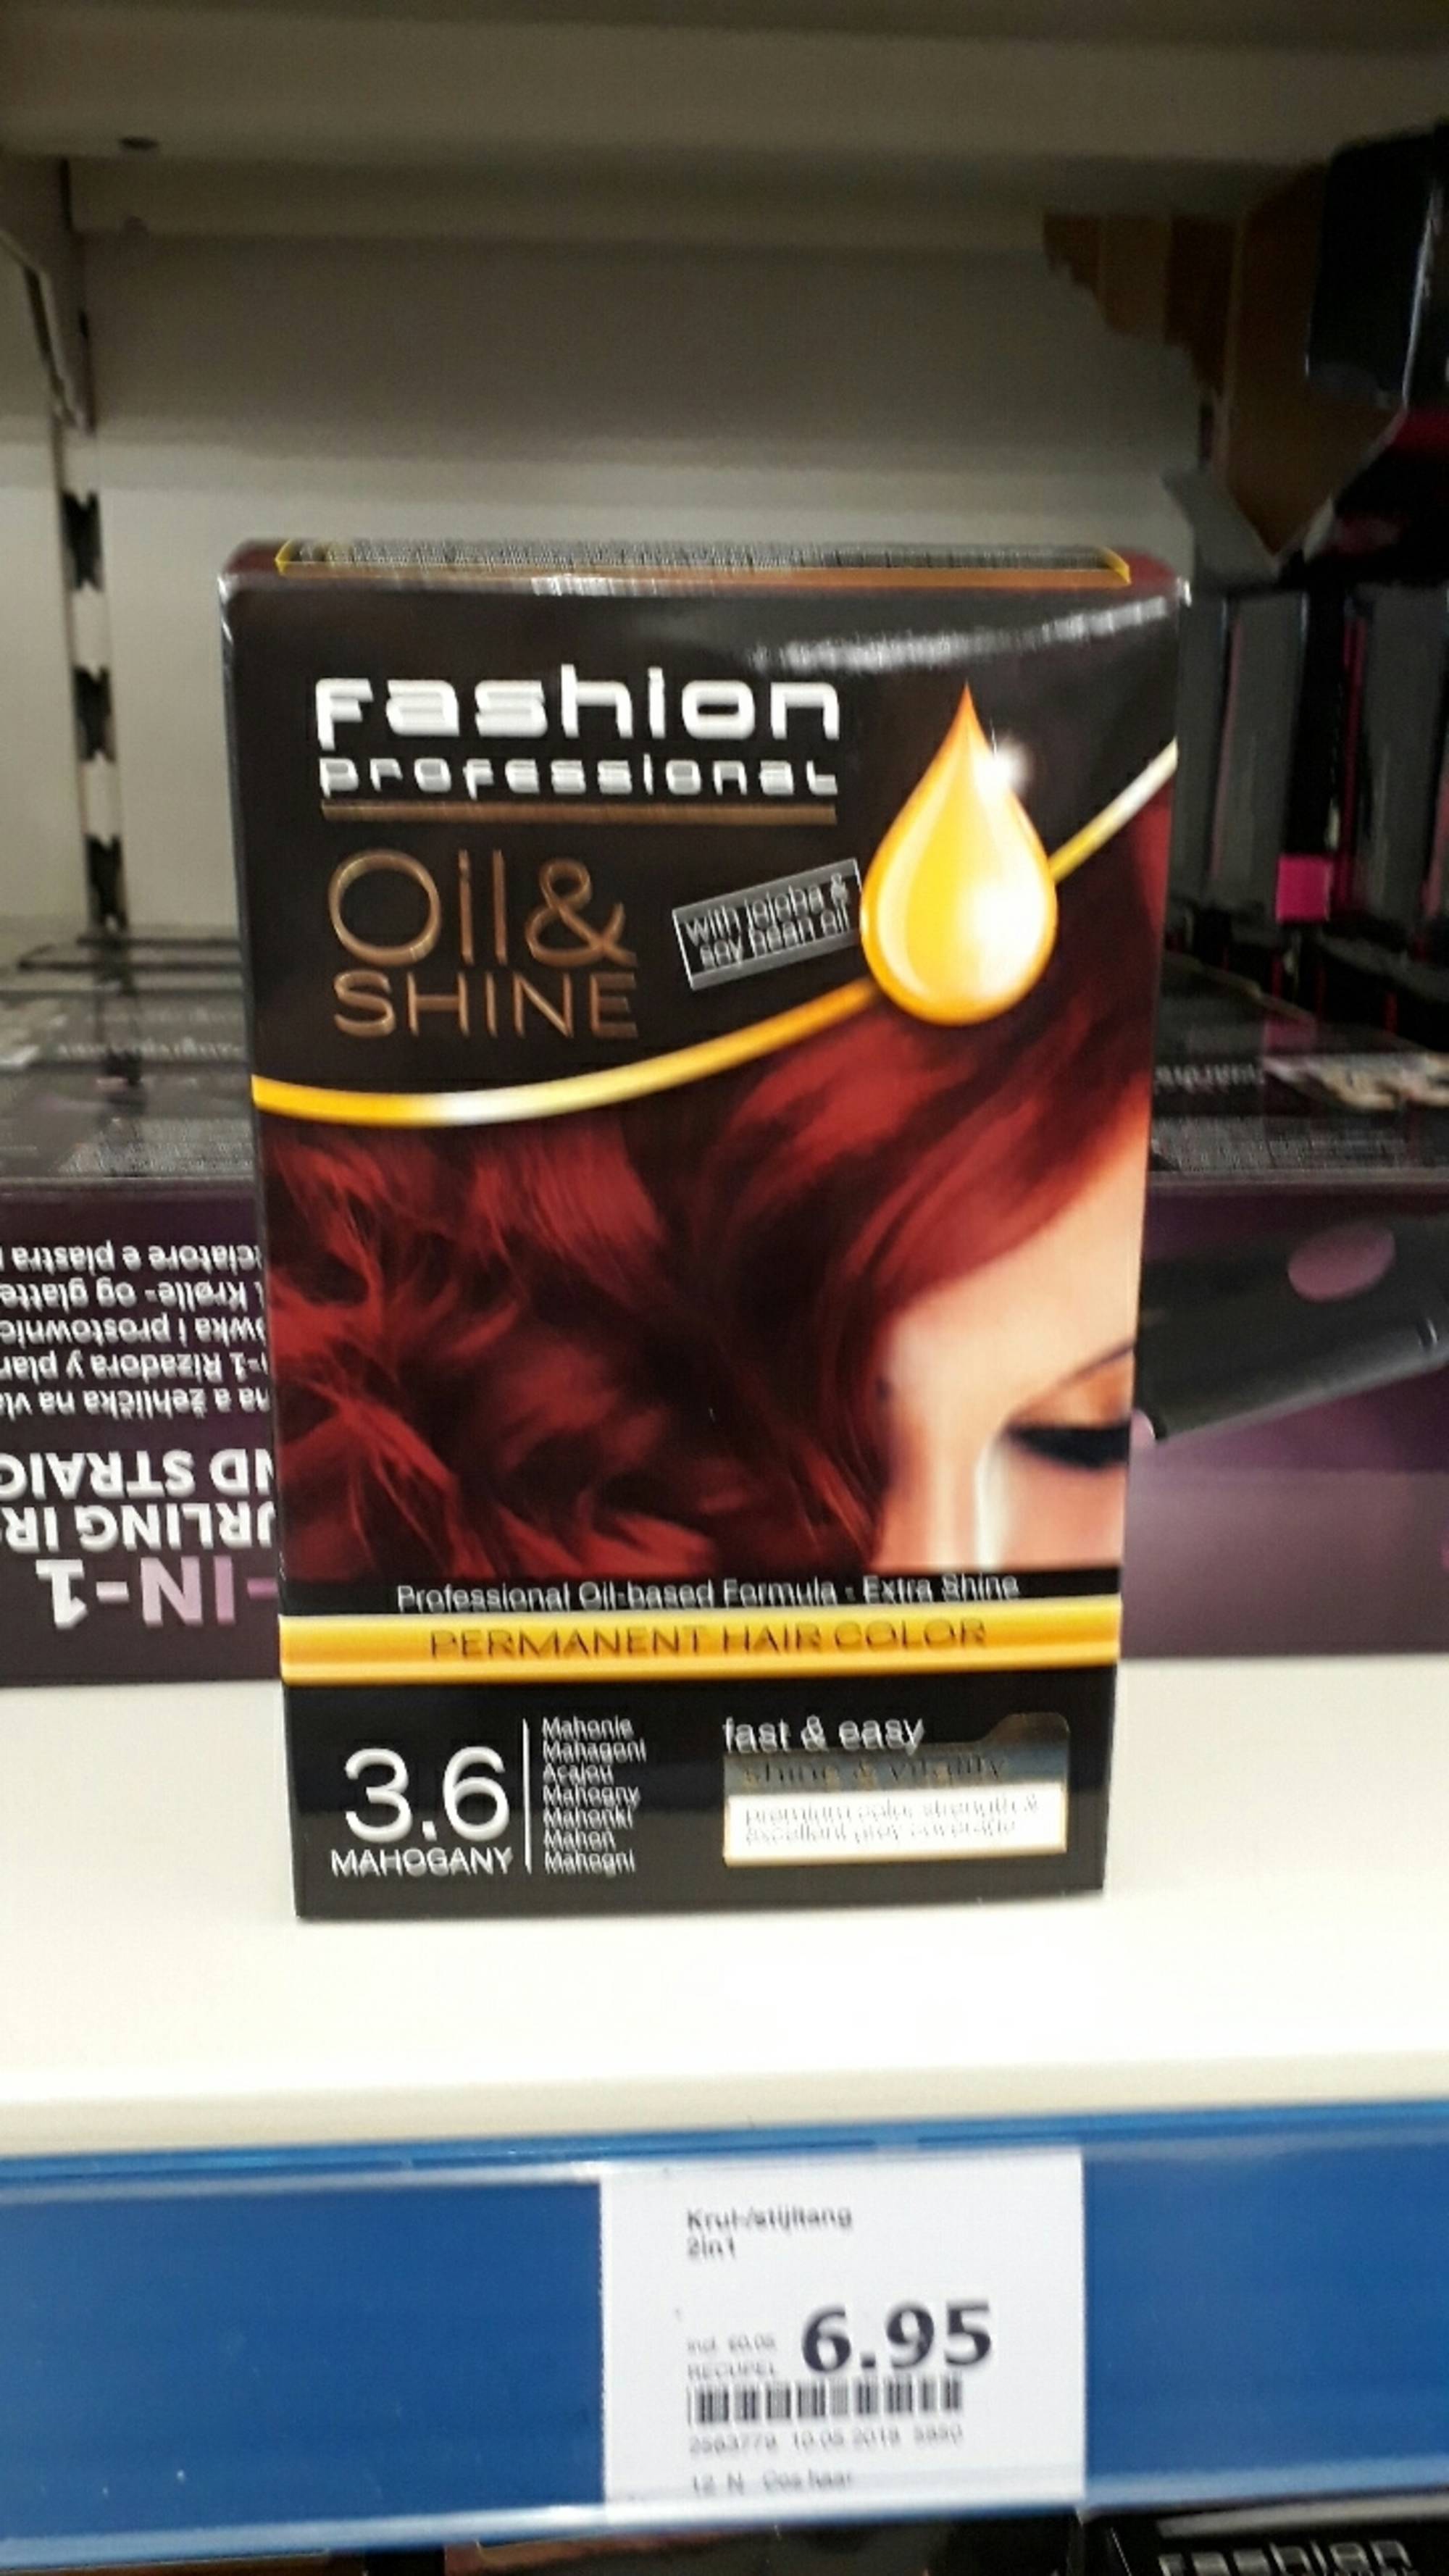 FASHION PROFESSIONAL - Oil & shine - Permanent hair color 3.6 Mahogany